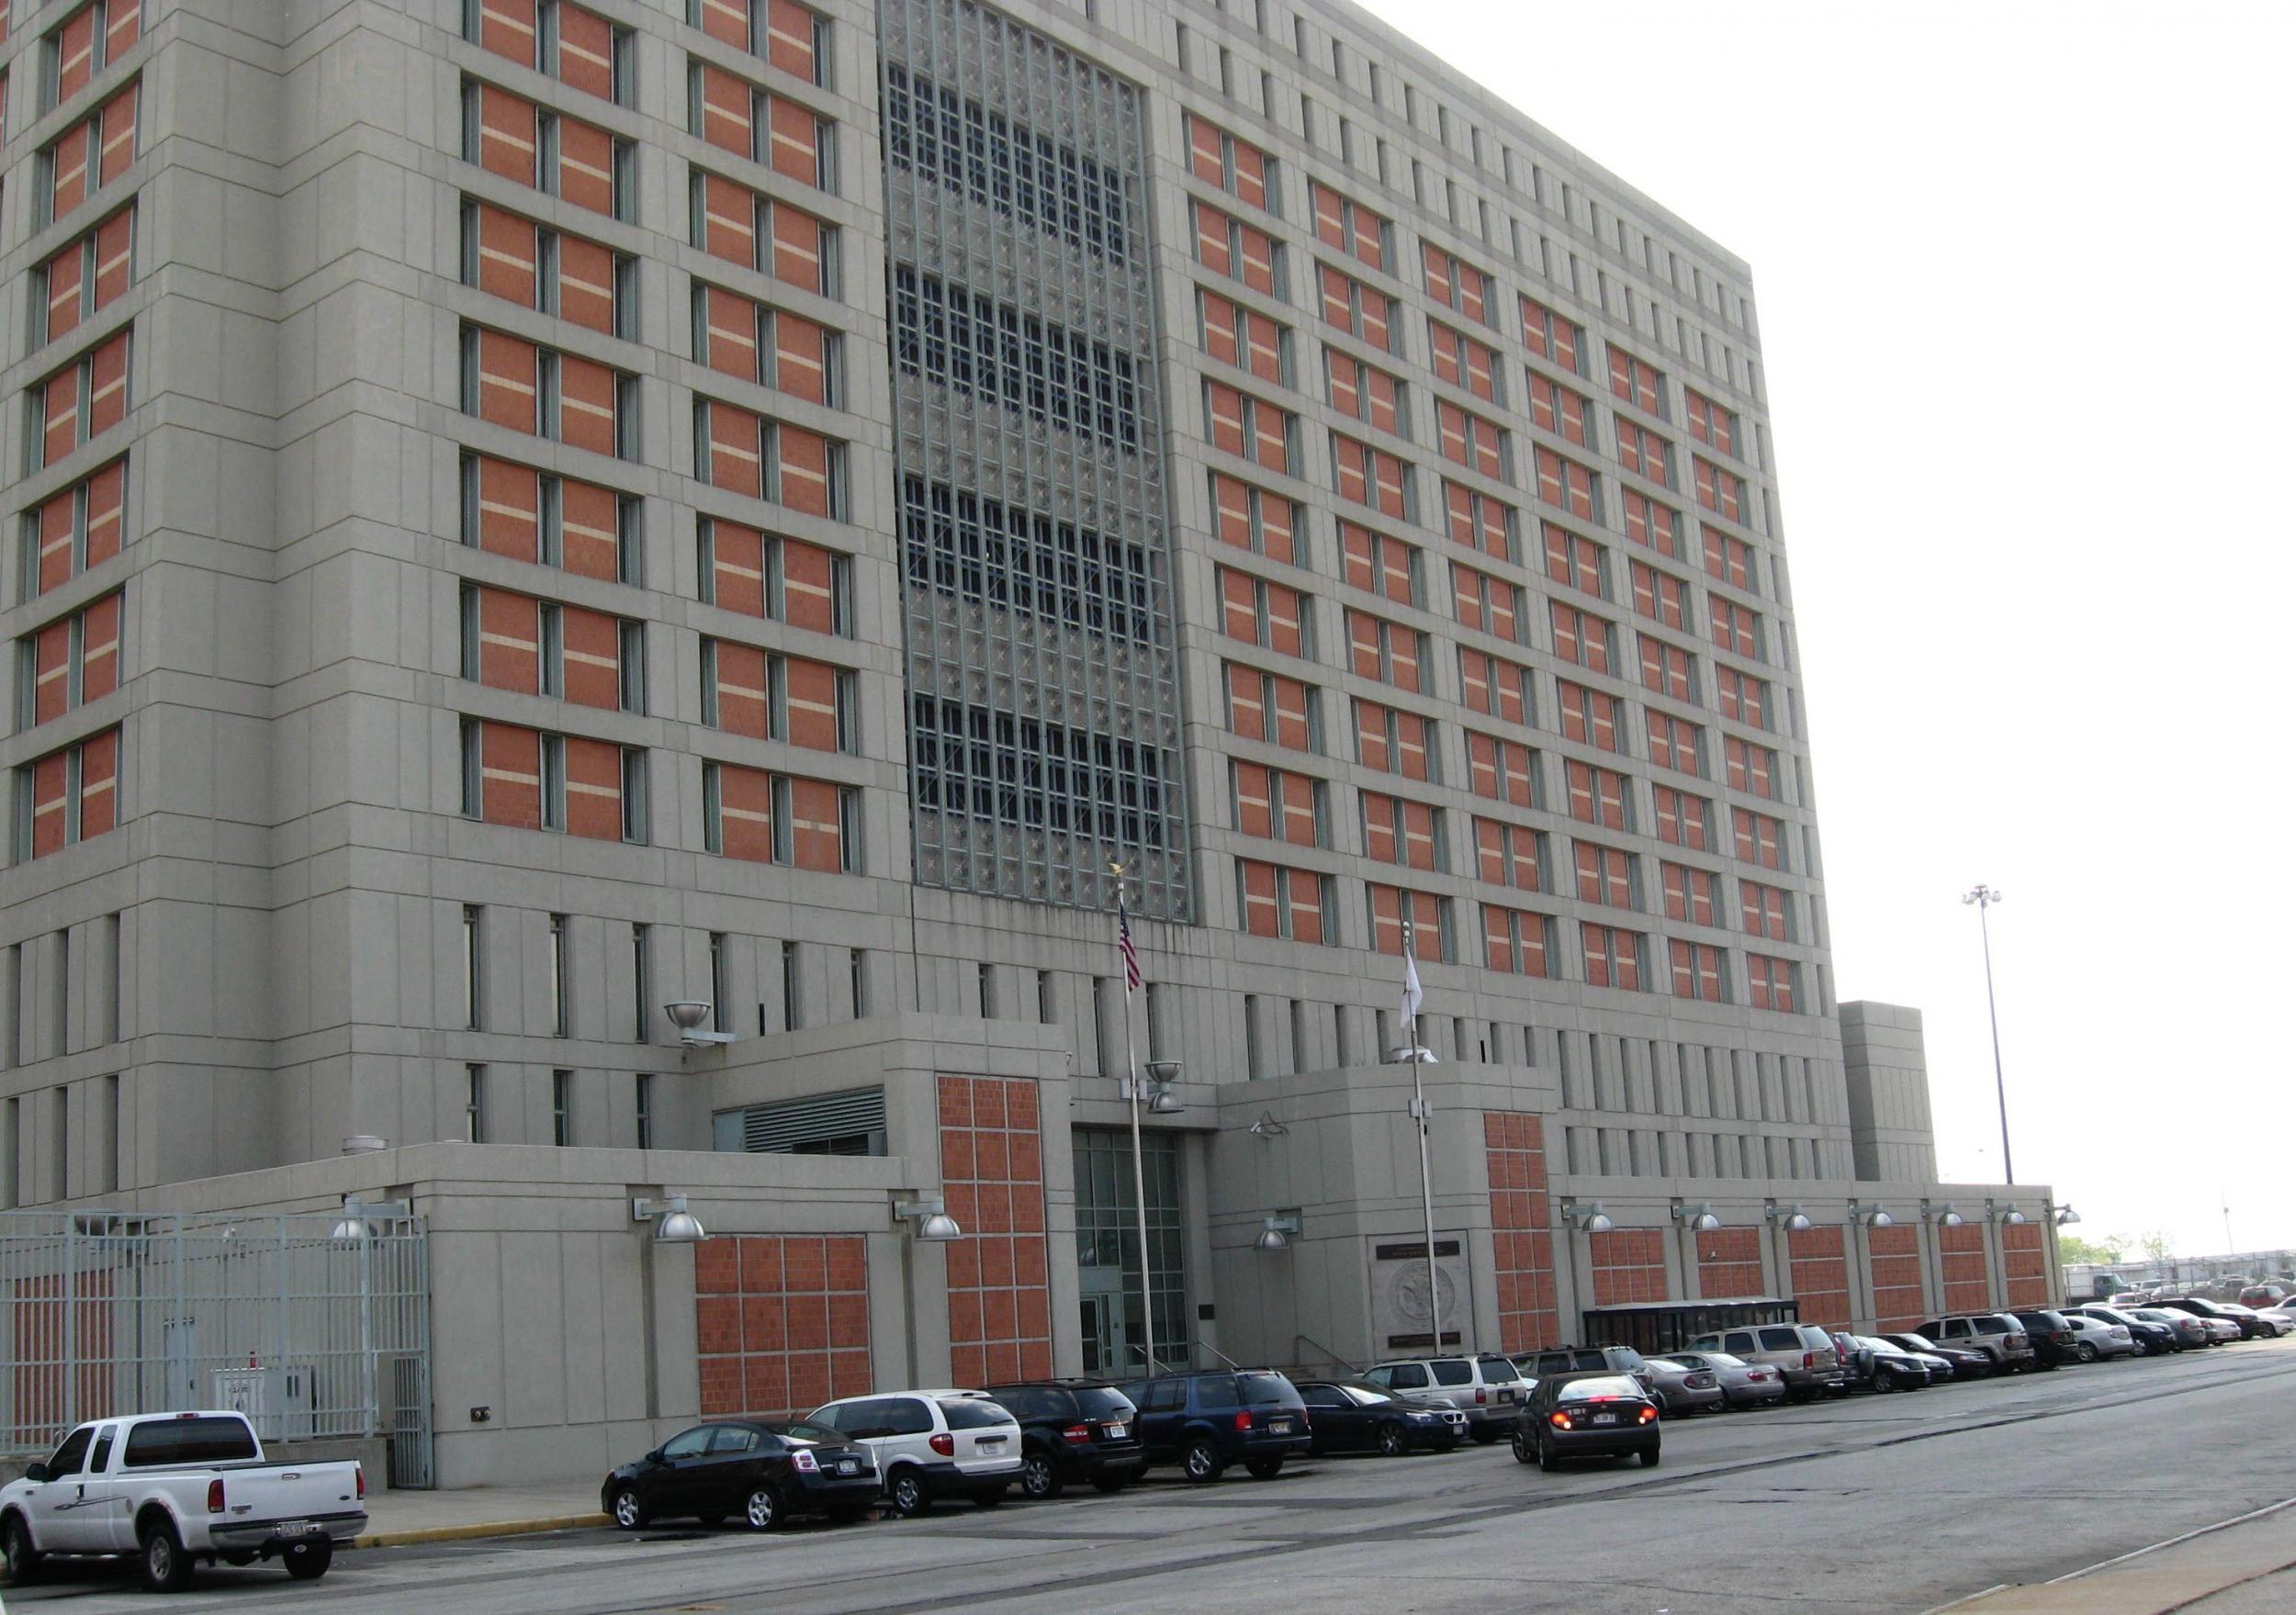 Jamel Floyd had been at Brooklyn's Metropolitan Detention Centre since October 2019